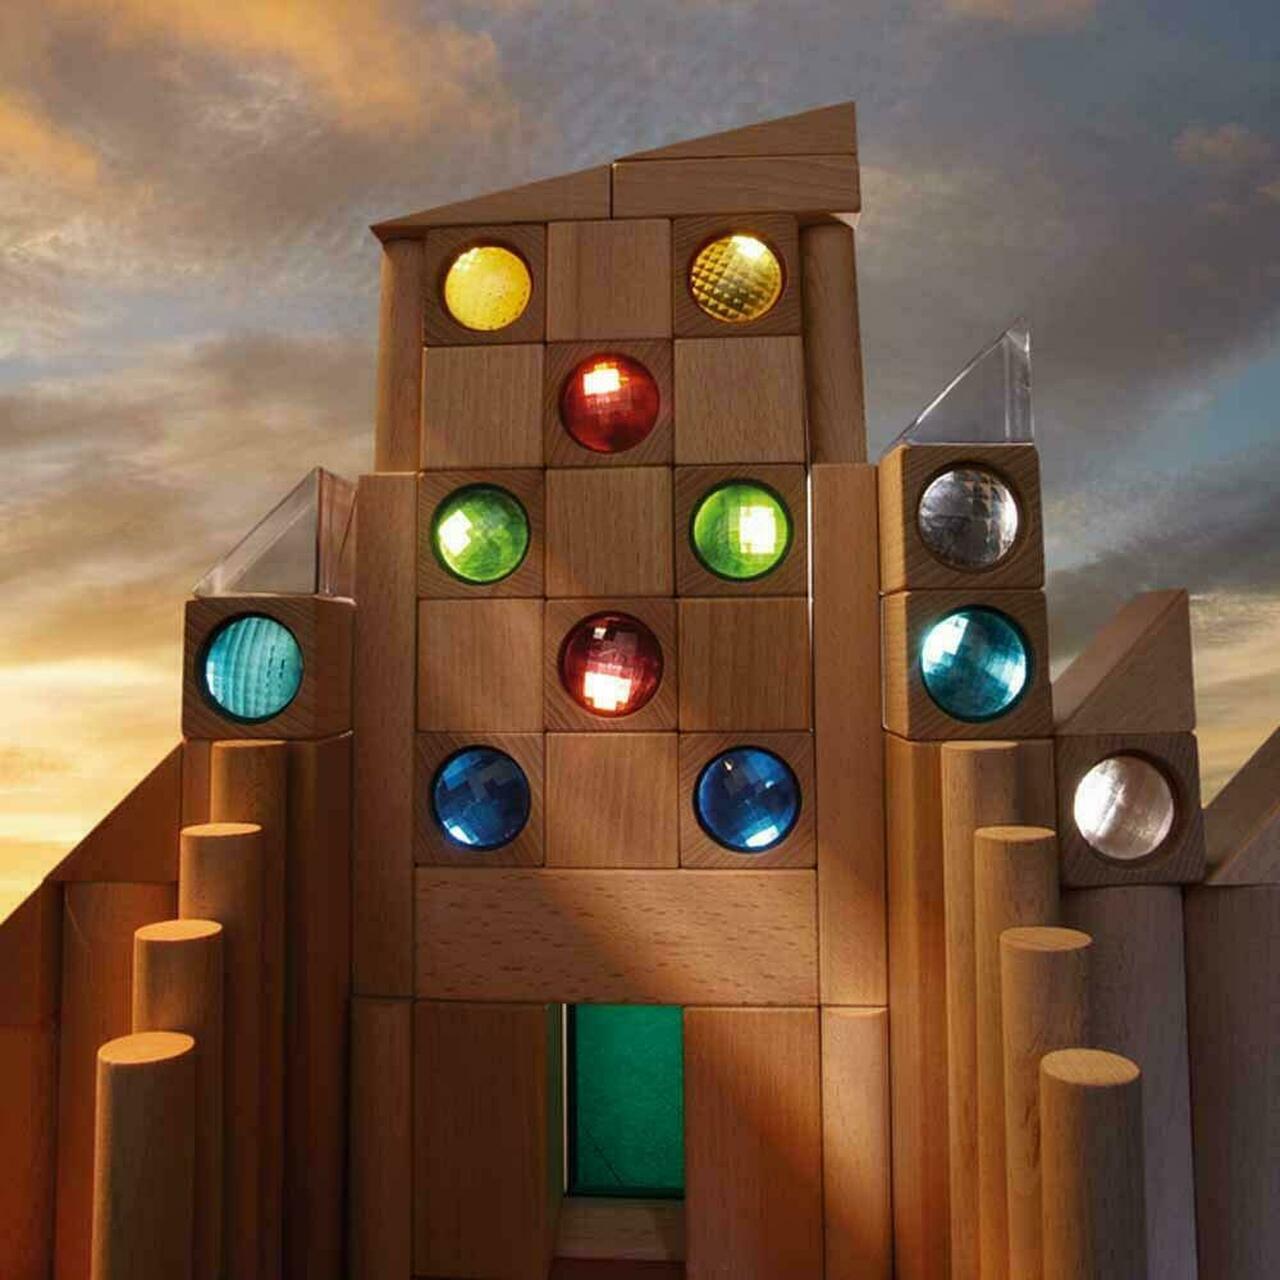 HABA Kaleidoscopic Colored Prisms Building Blocks